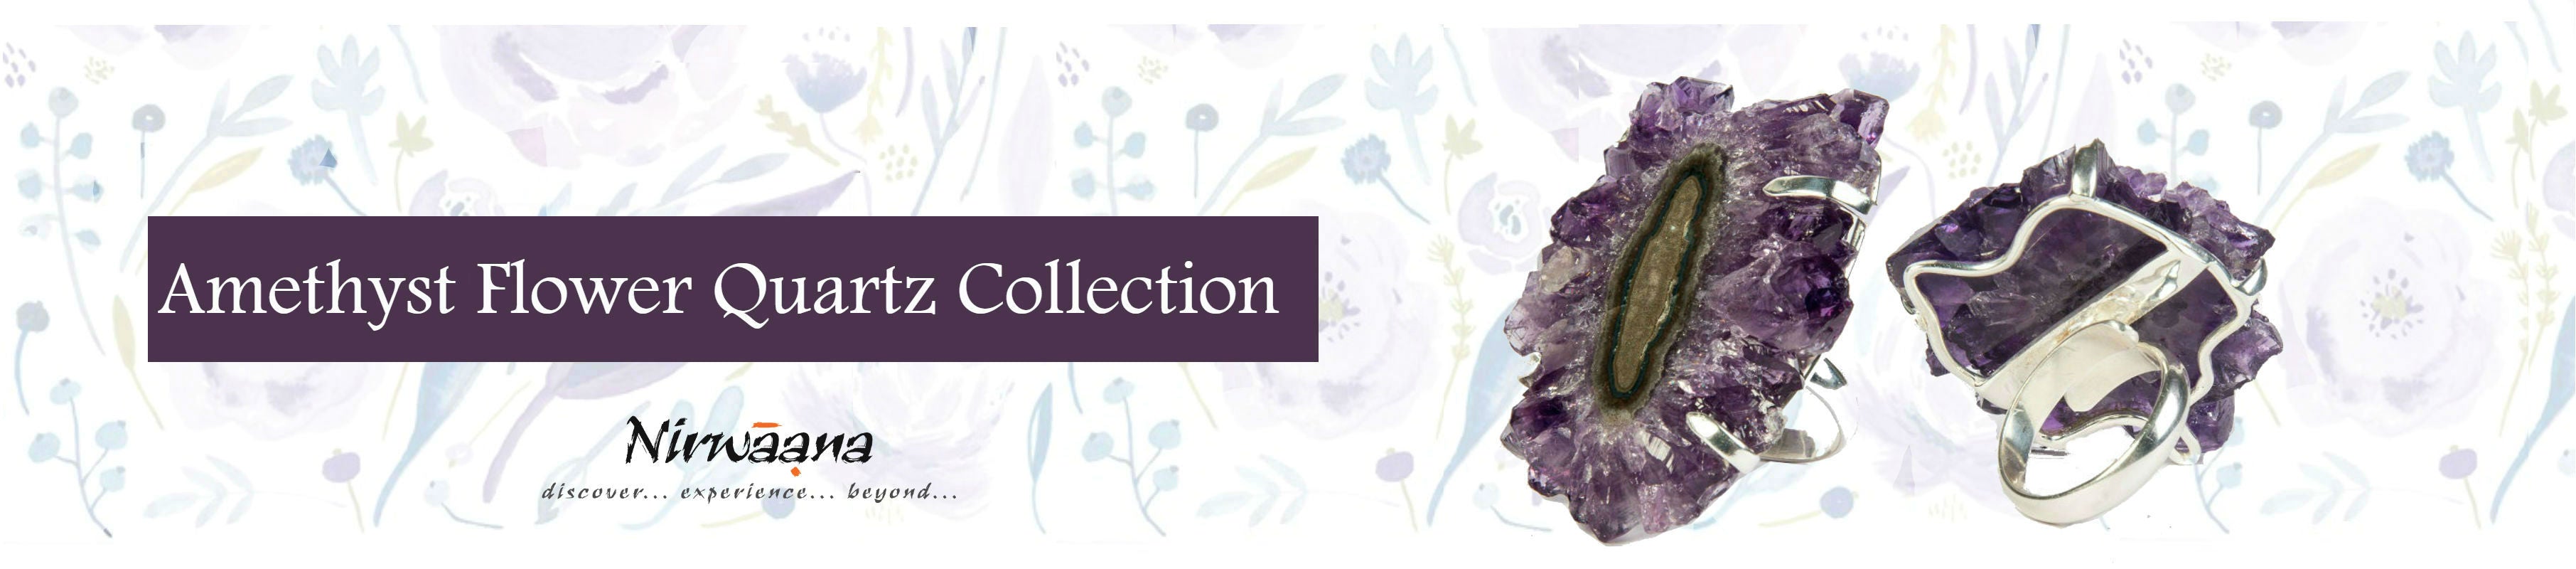 Nirwaana Amethyst flower quartz collection 